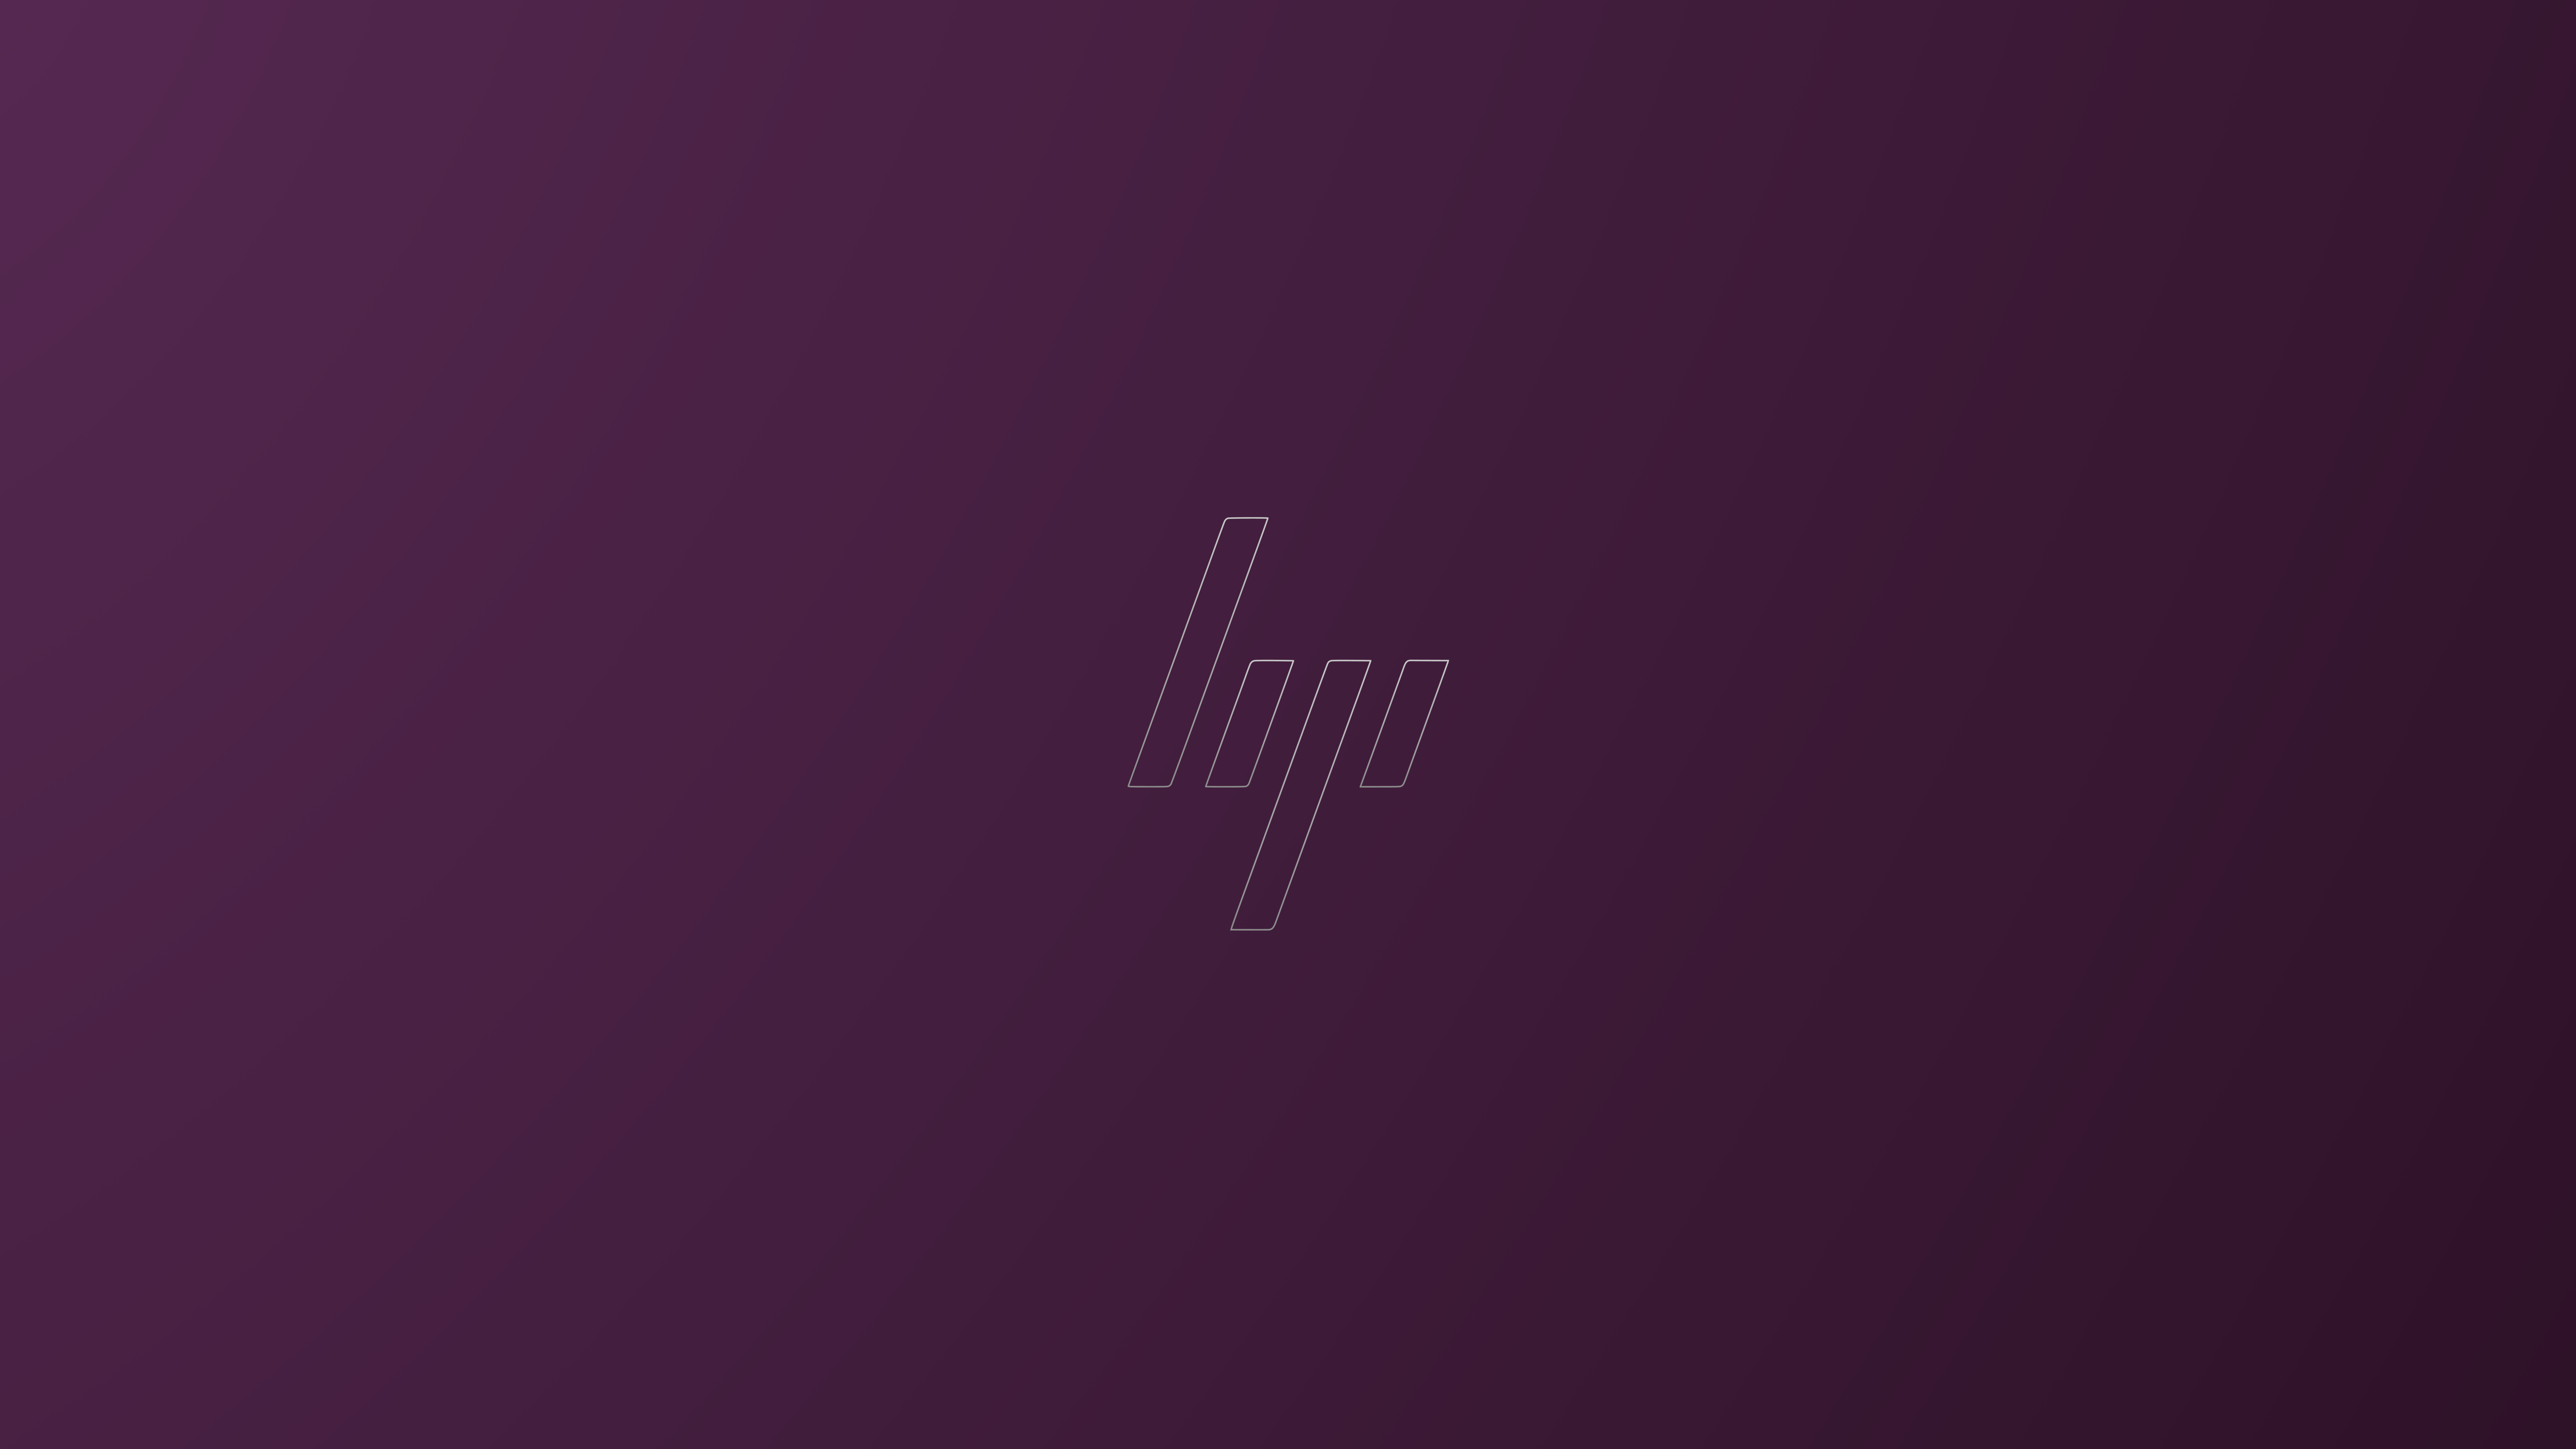 Brand Logo Hewlett Packard Purple Background Minimalism Digital Art Simple Background 7680x4320